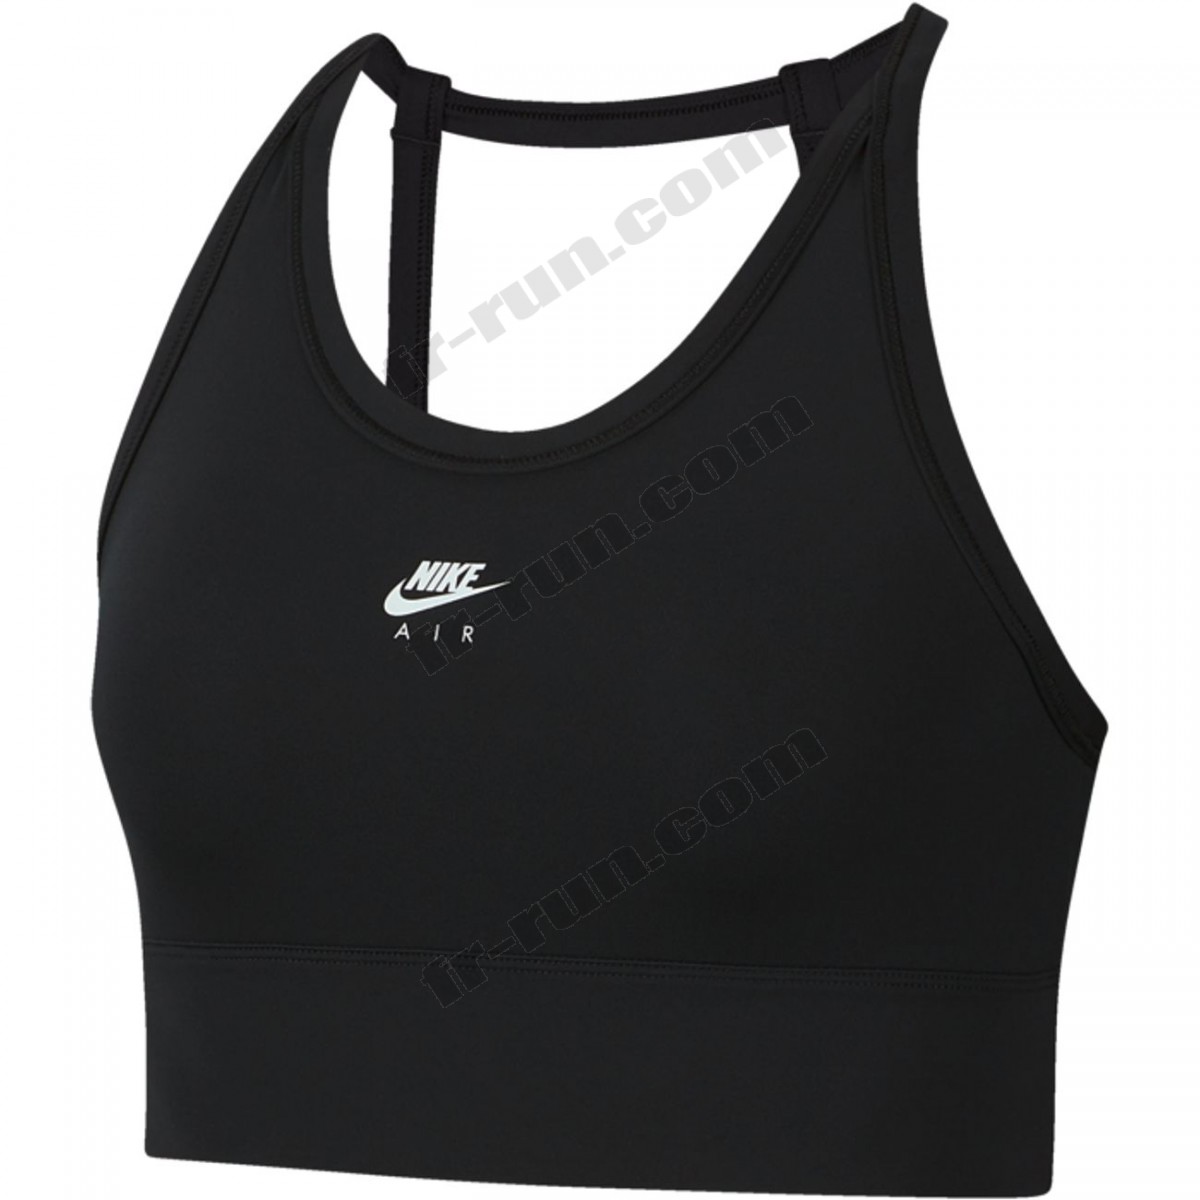 Nike/BRASSIERE Fitness femme NIKE MED PAD AIR ◇◇◇ Pas Cher Du Tout - -0